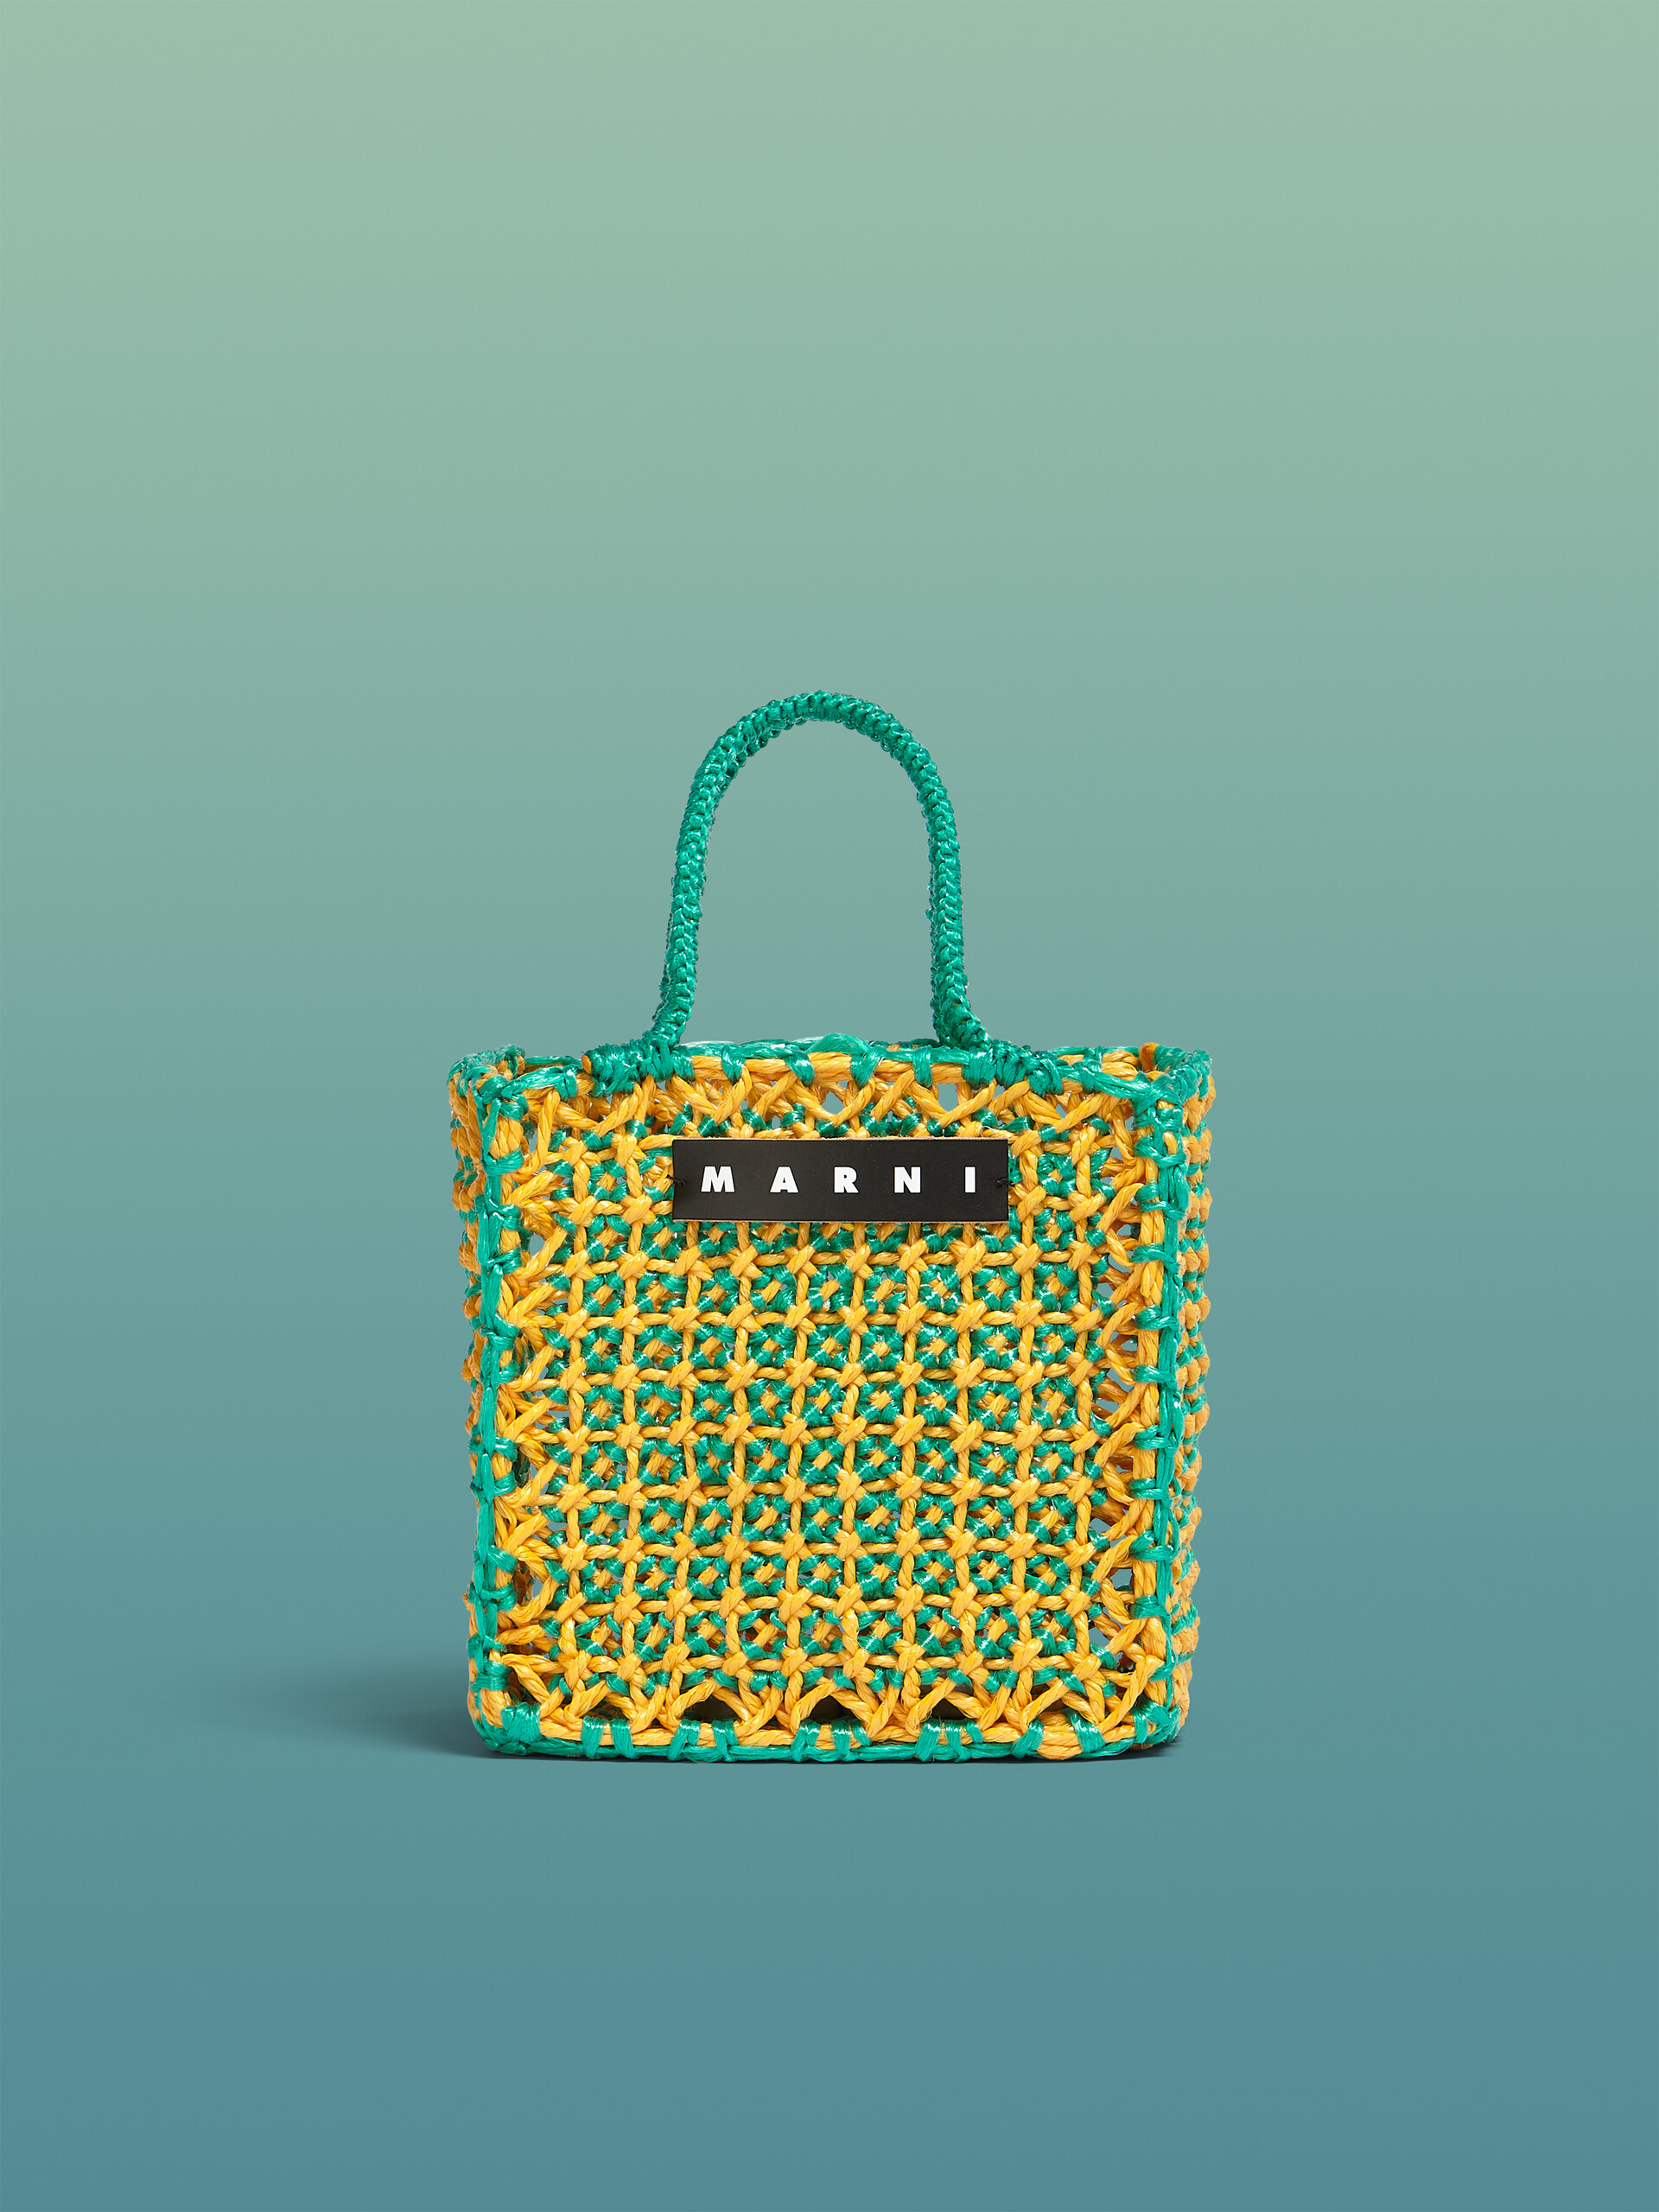 MARNI MARKET JURTA small bag in green and yellow crochet - Shopping Bags - Image 1